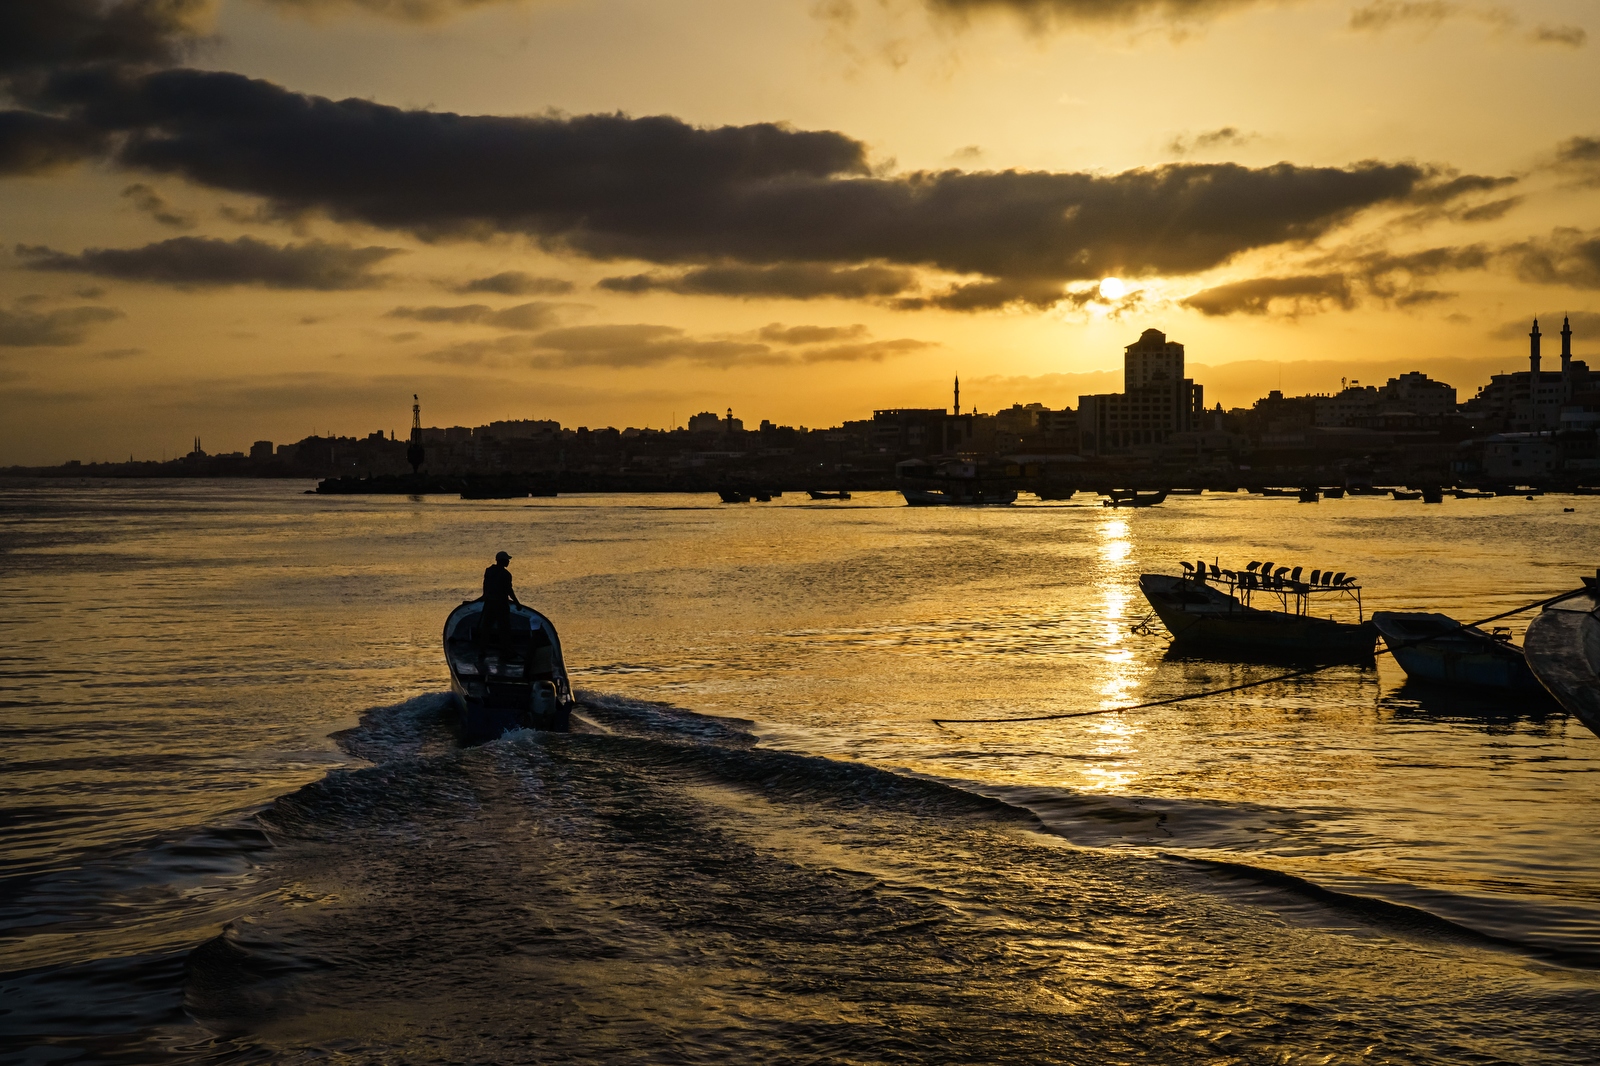 A motor boat heads out to sea as sun sets on Gaza's coastline